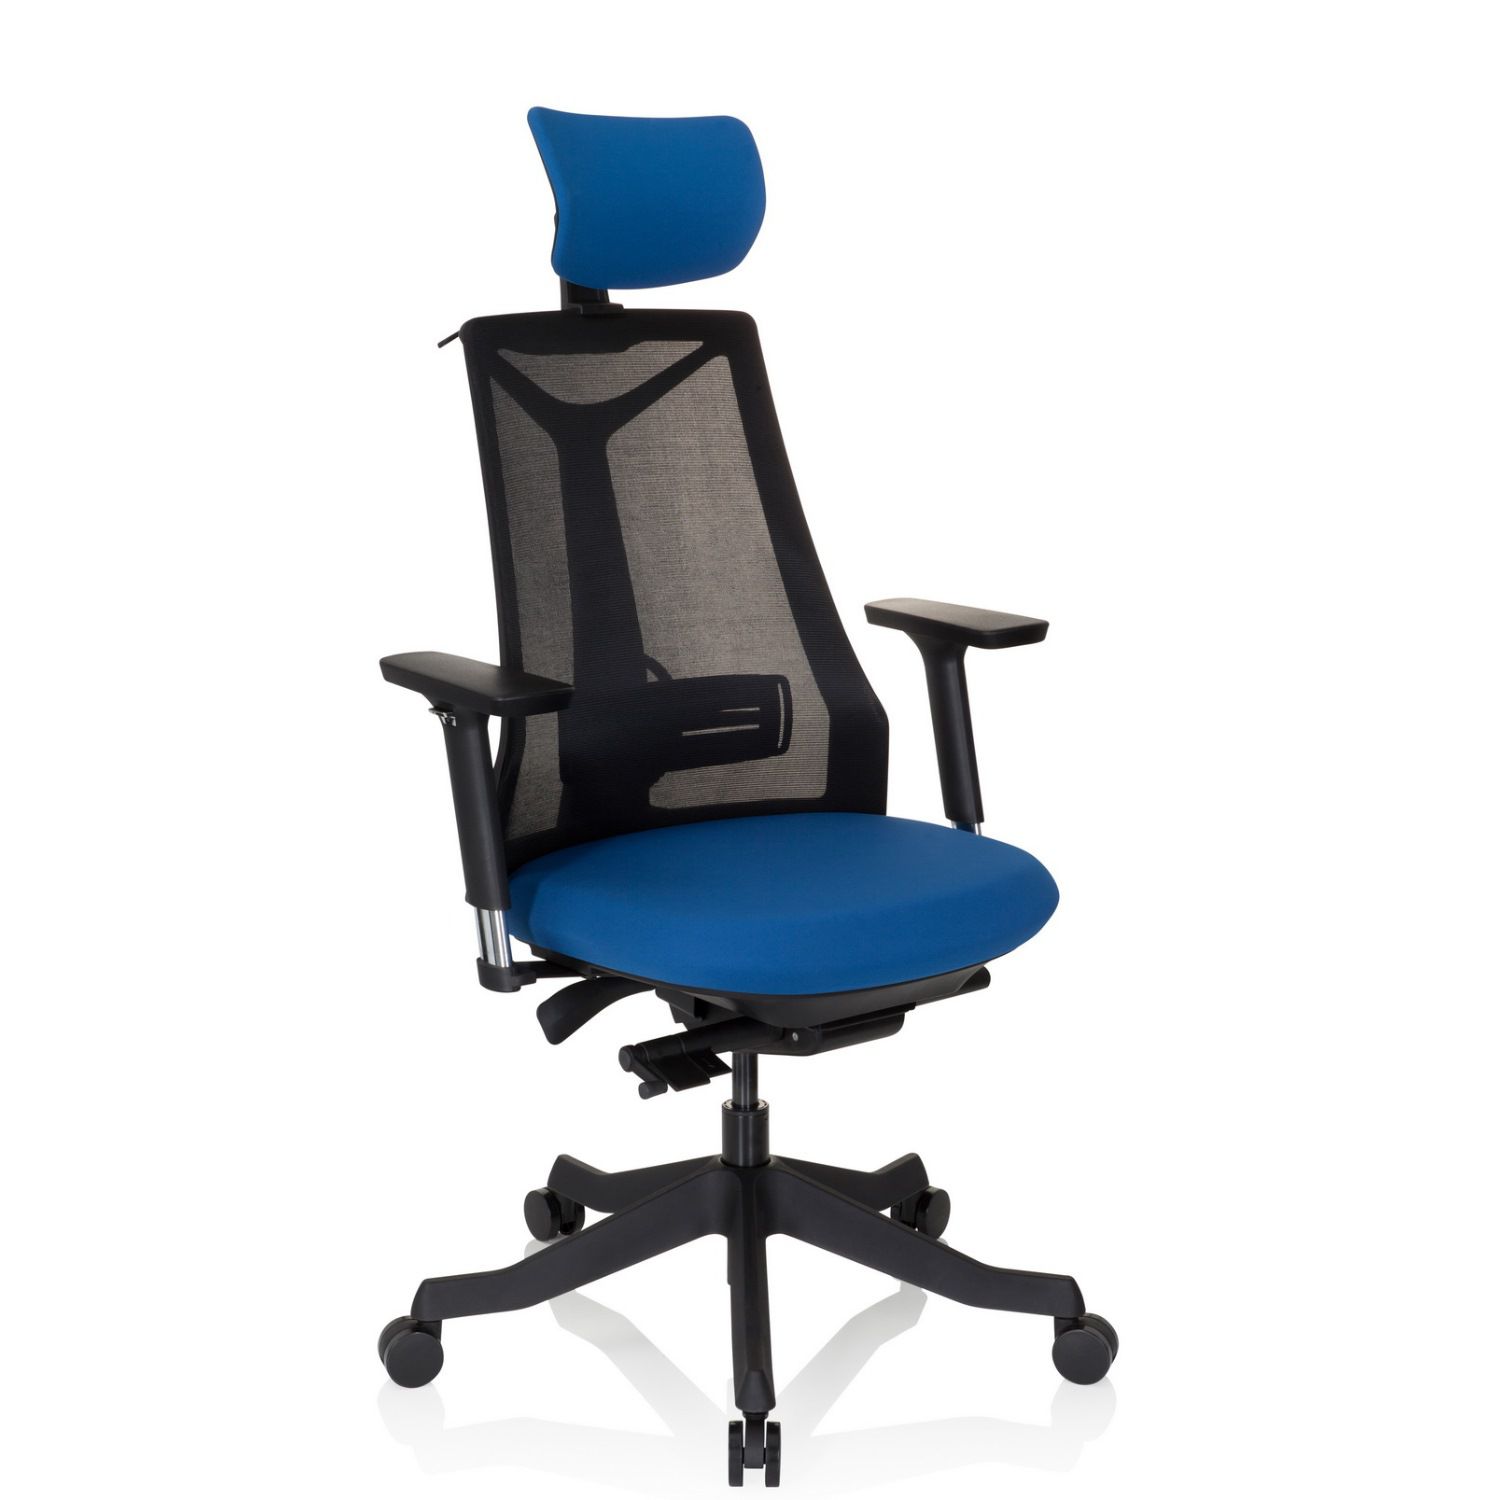 * Bürostuhl / Drehstuhl FALUN Netzstoff / Stoff blau / schwarz hjh OFFICE